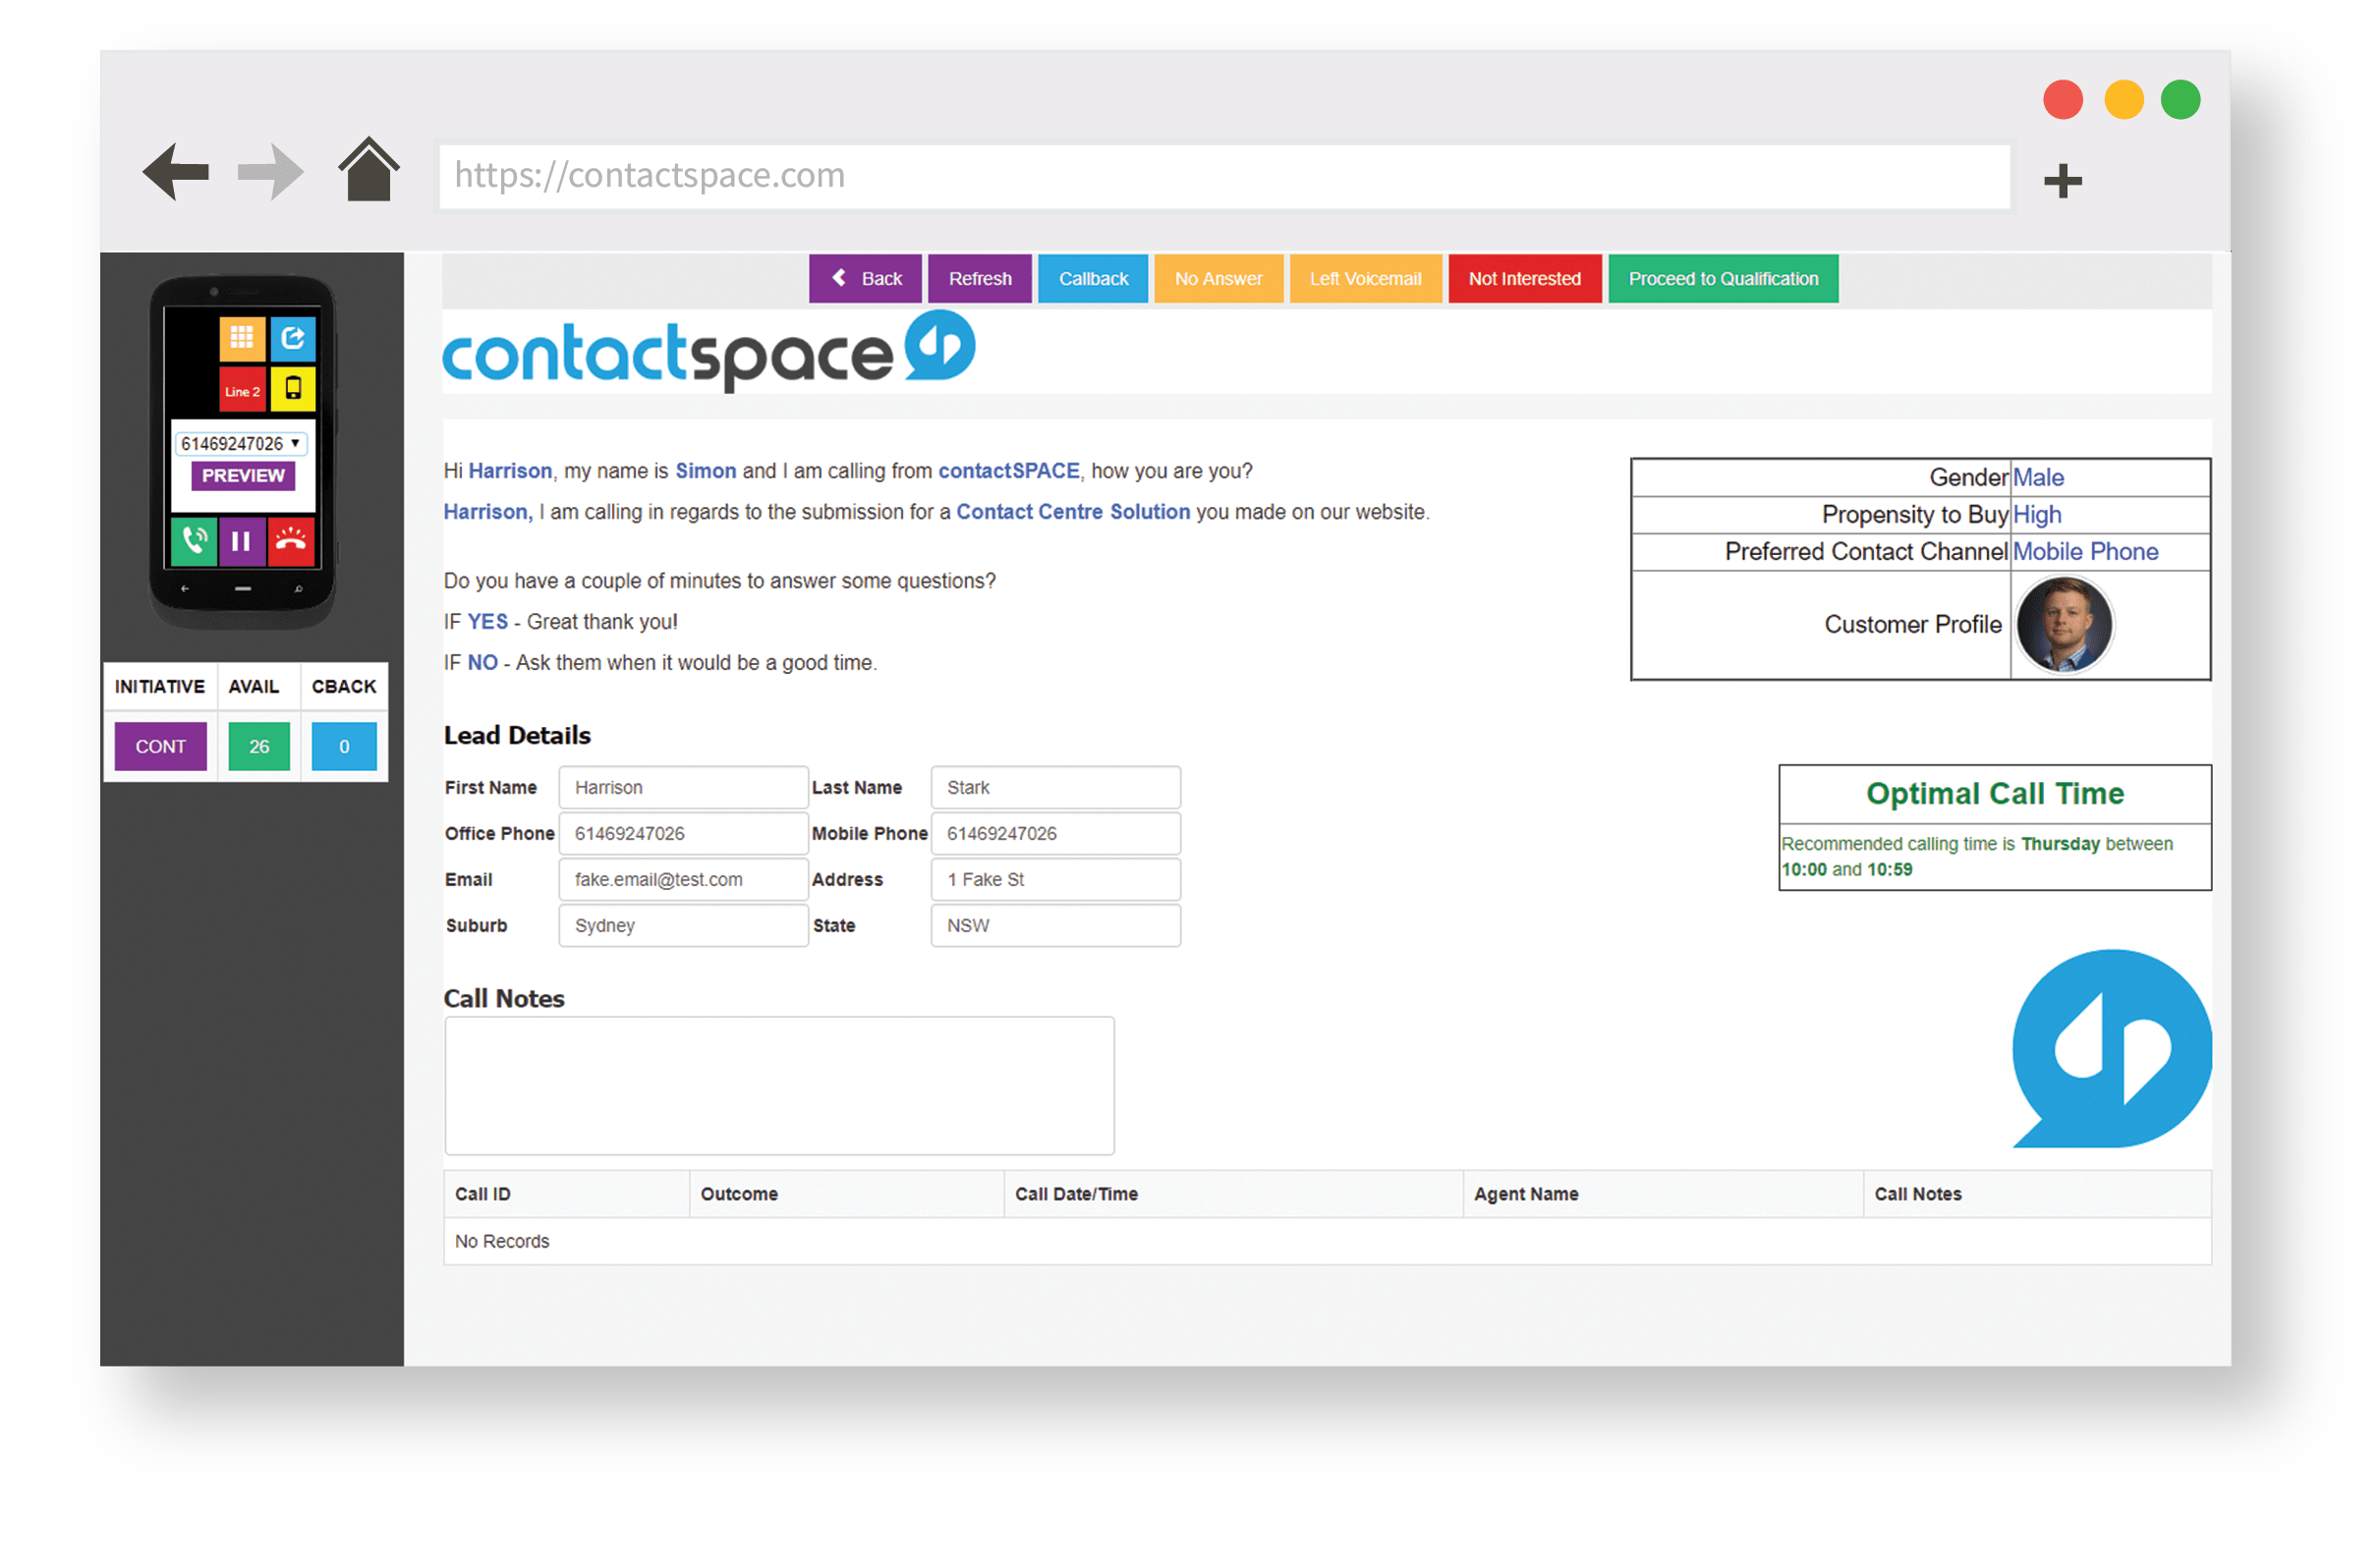 contact-space-callguides-screenshot-min-2